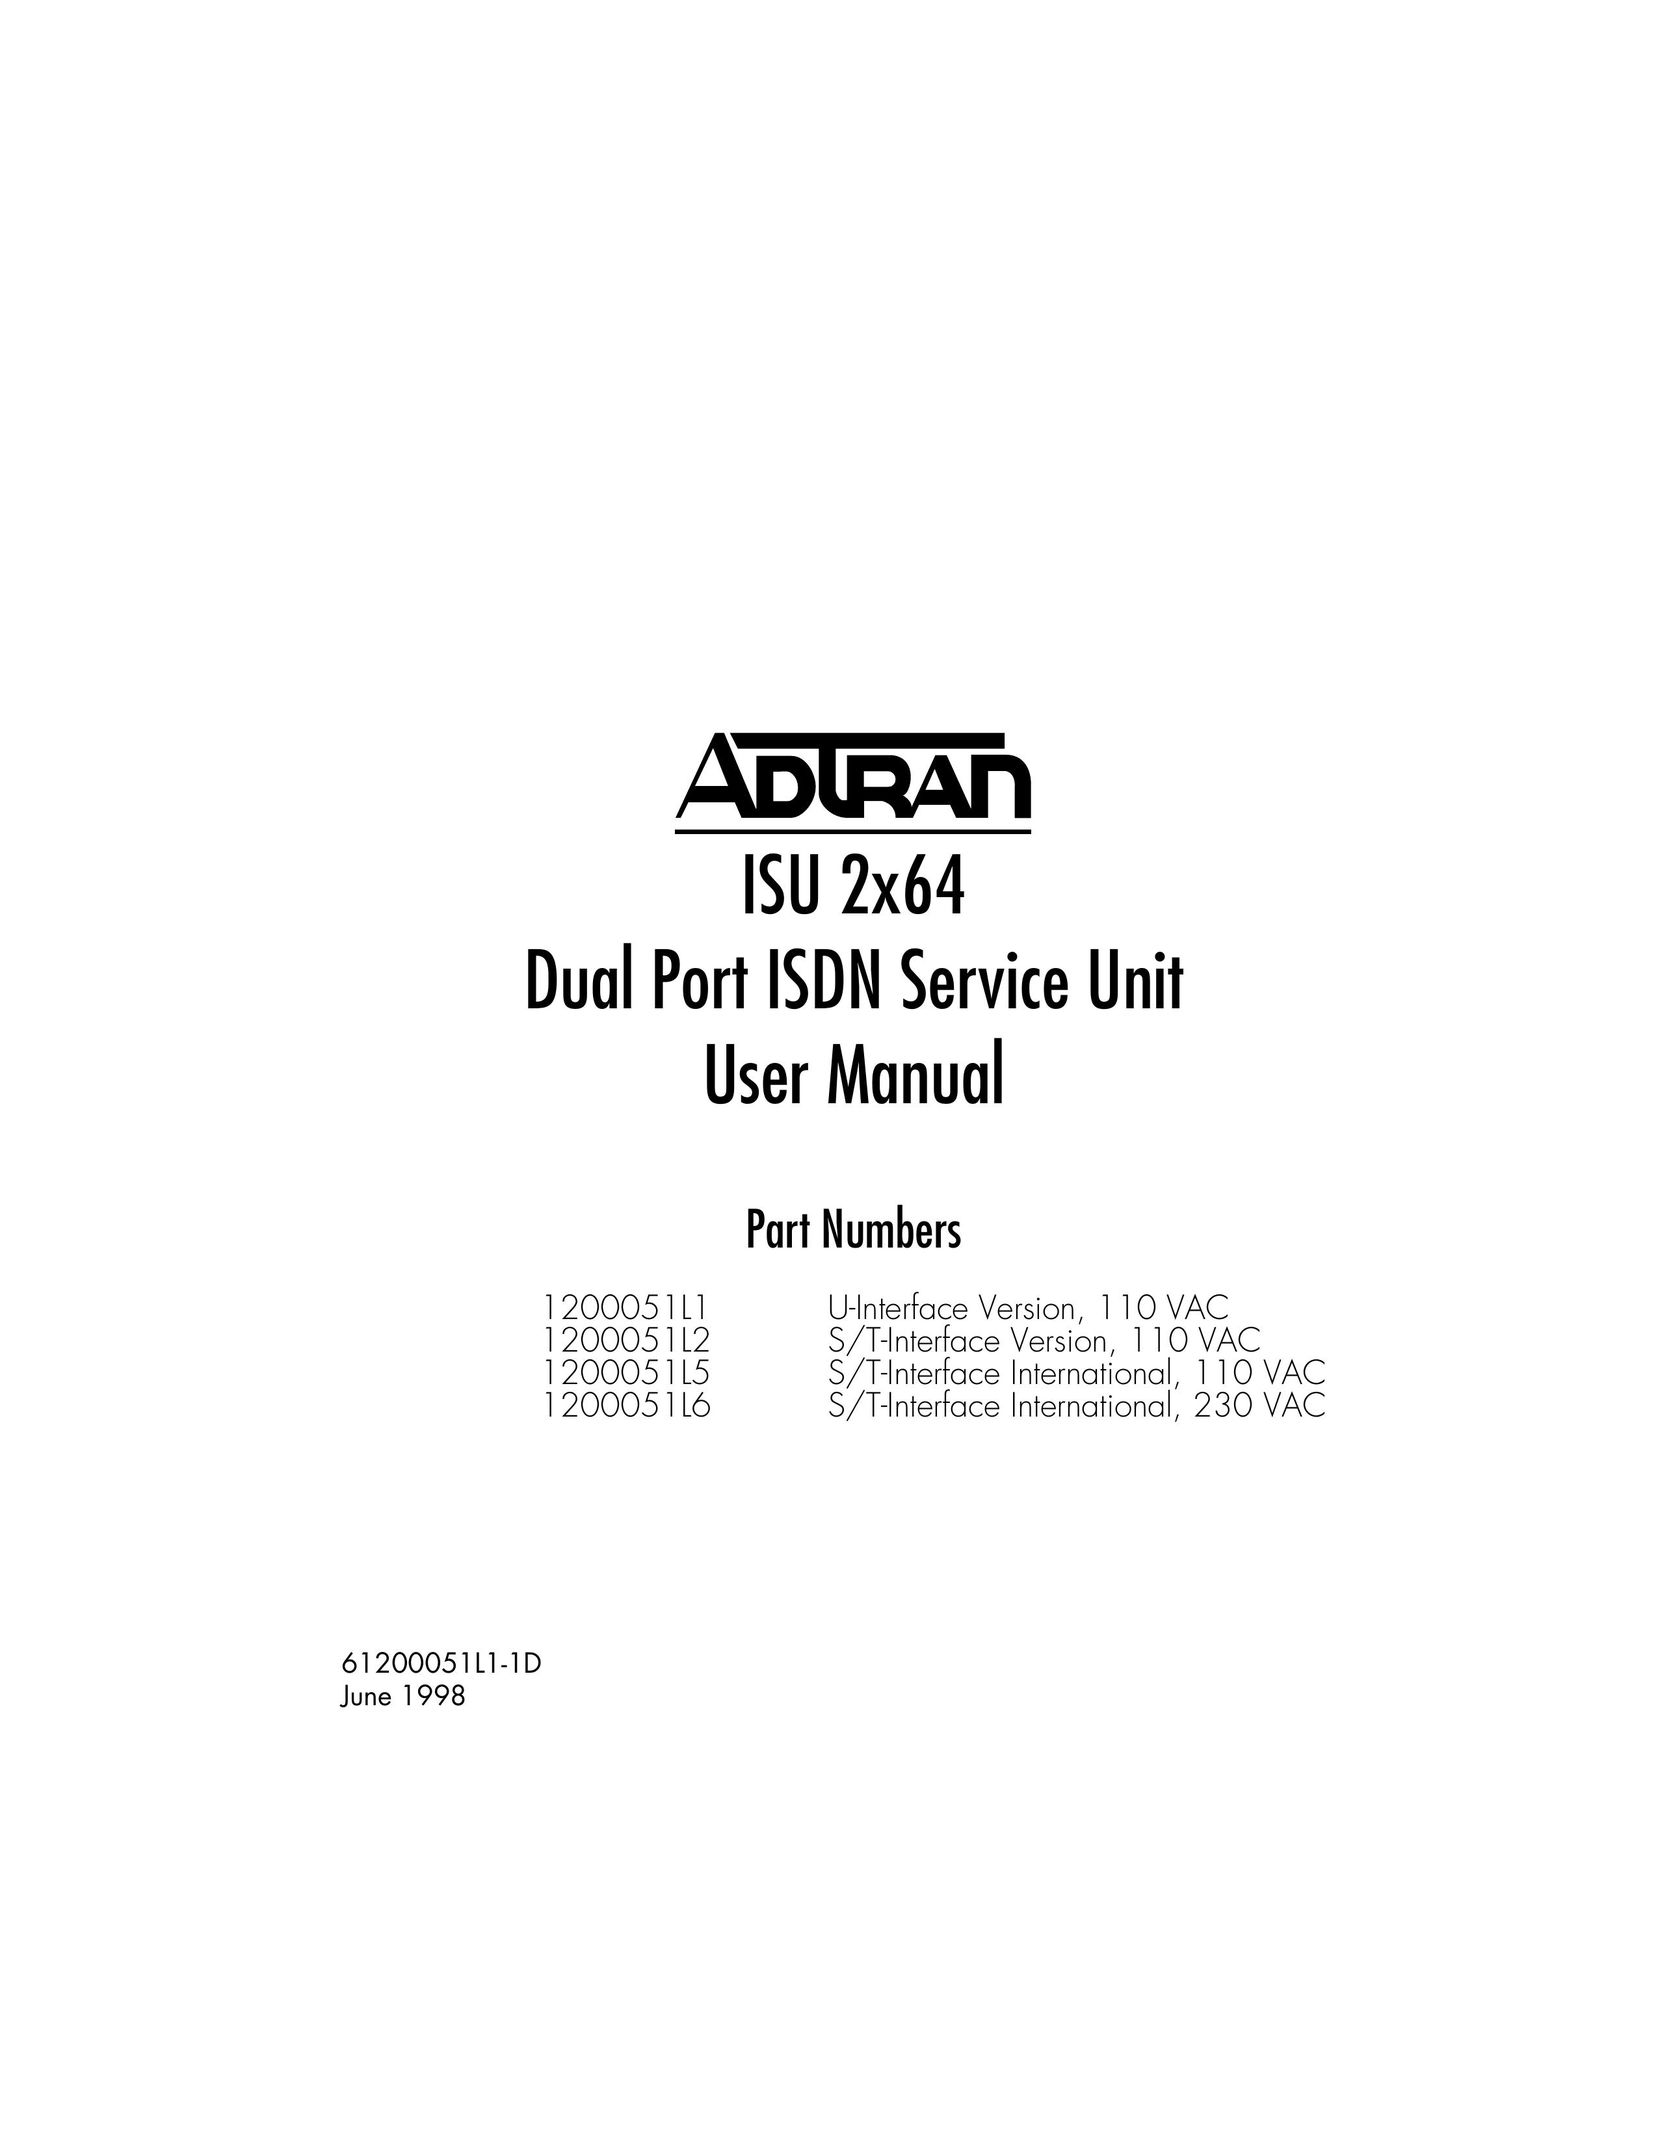 ADTRAN 1200051L5 Network Card User Manual